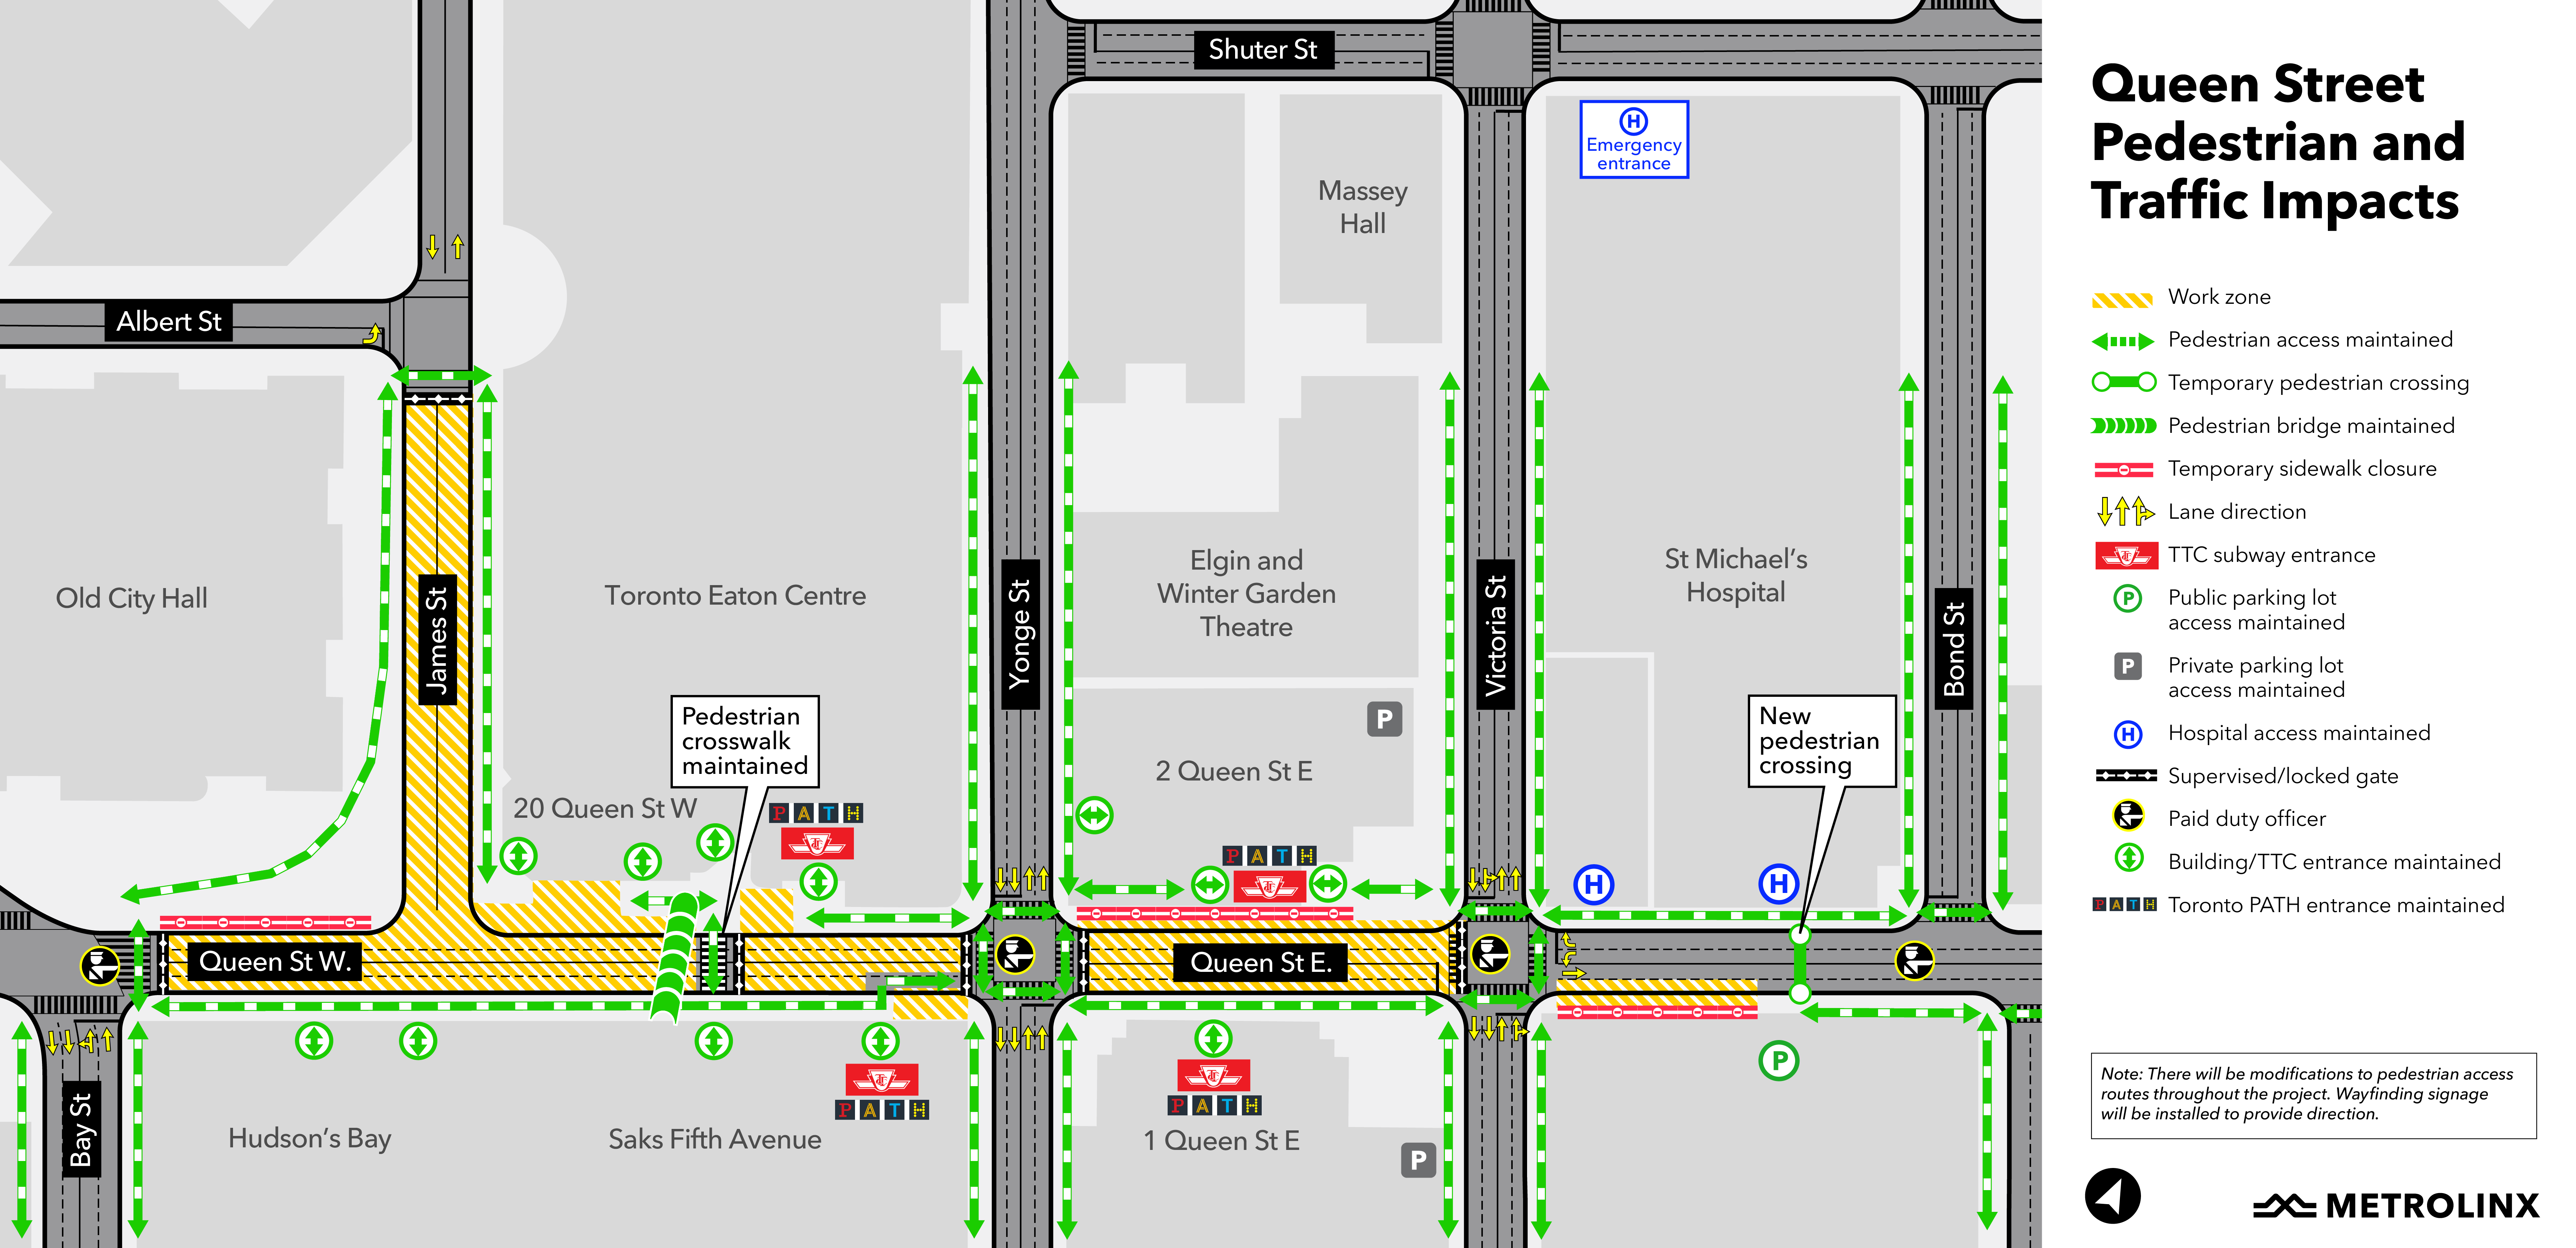 Metrolinx - Queen Street diversion starts May 1 for Ontario Line work